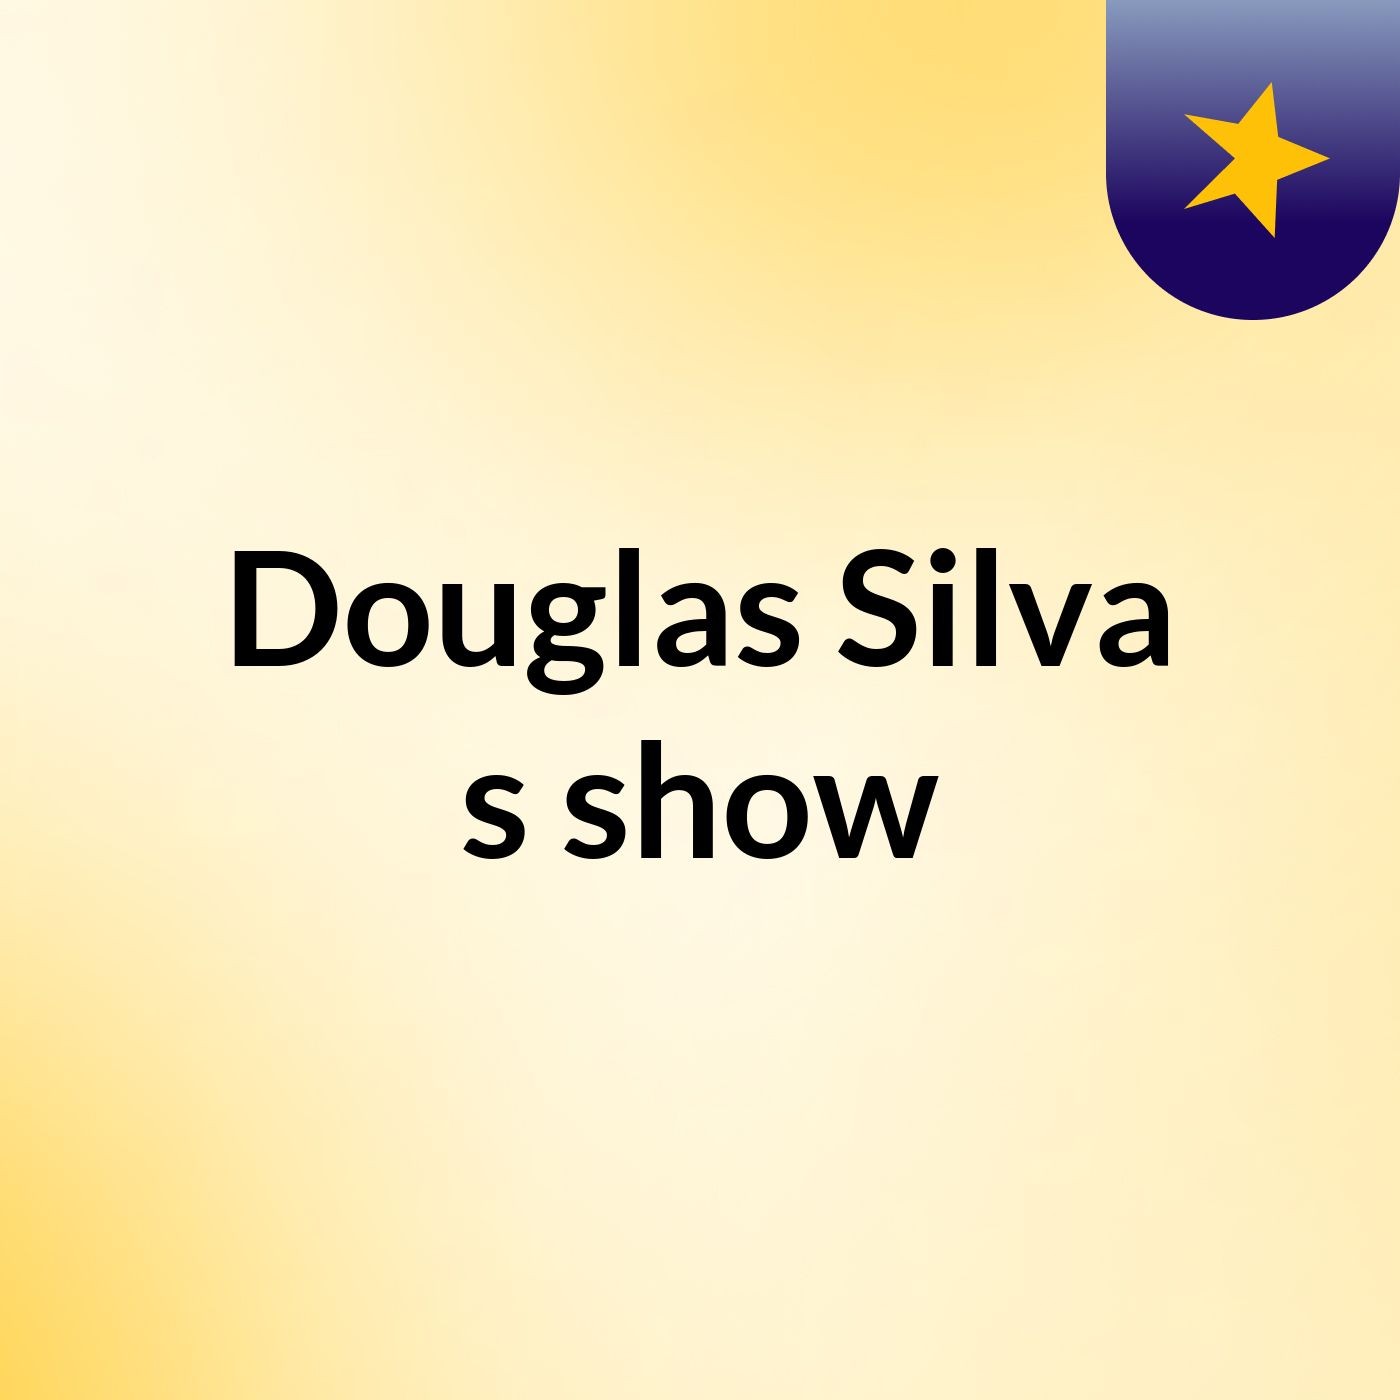 Douglas Silva's show